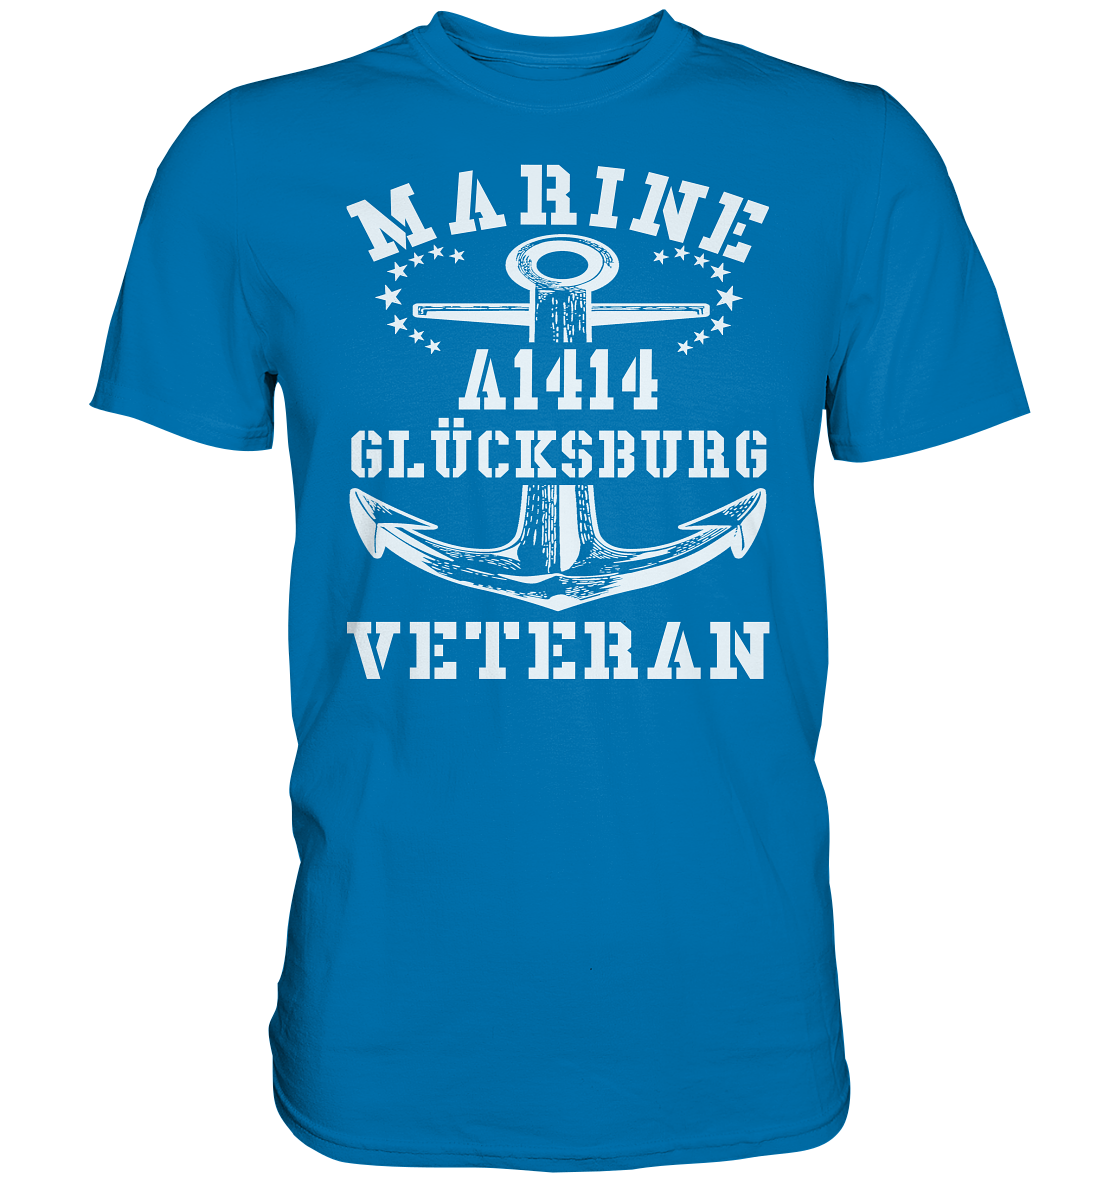 Troßschiff A1414 GLÜCKSBURG Marine Veteran - Premium Shirt